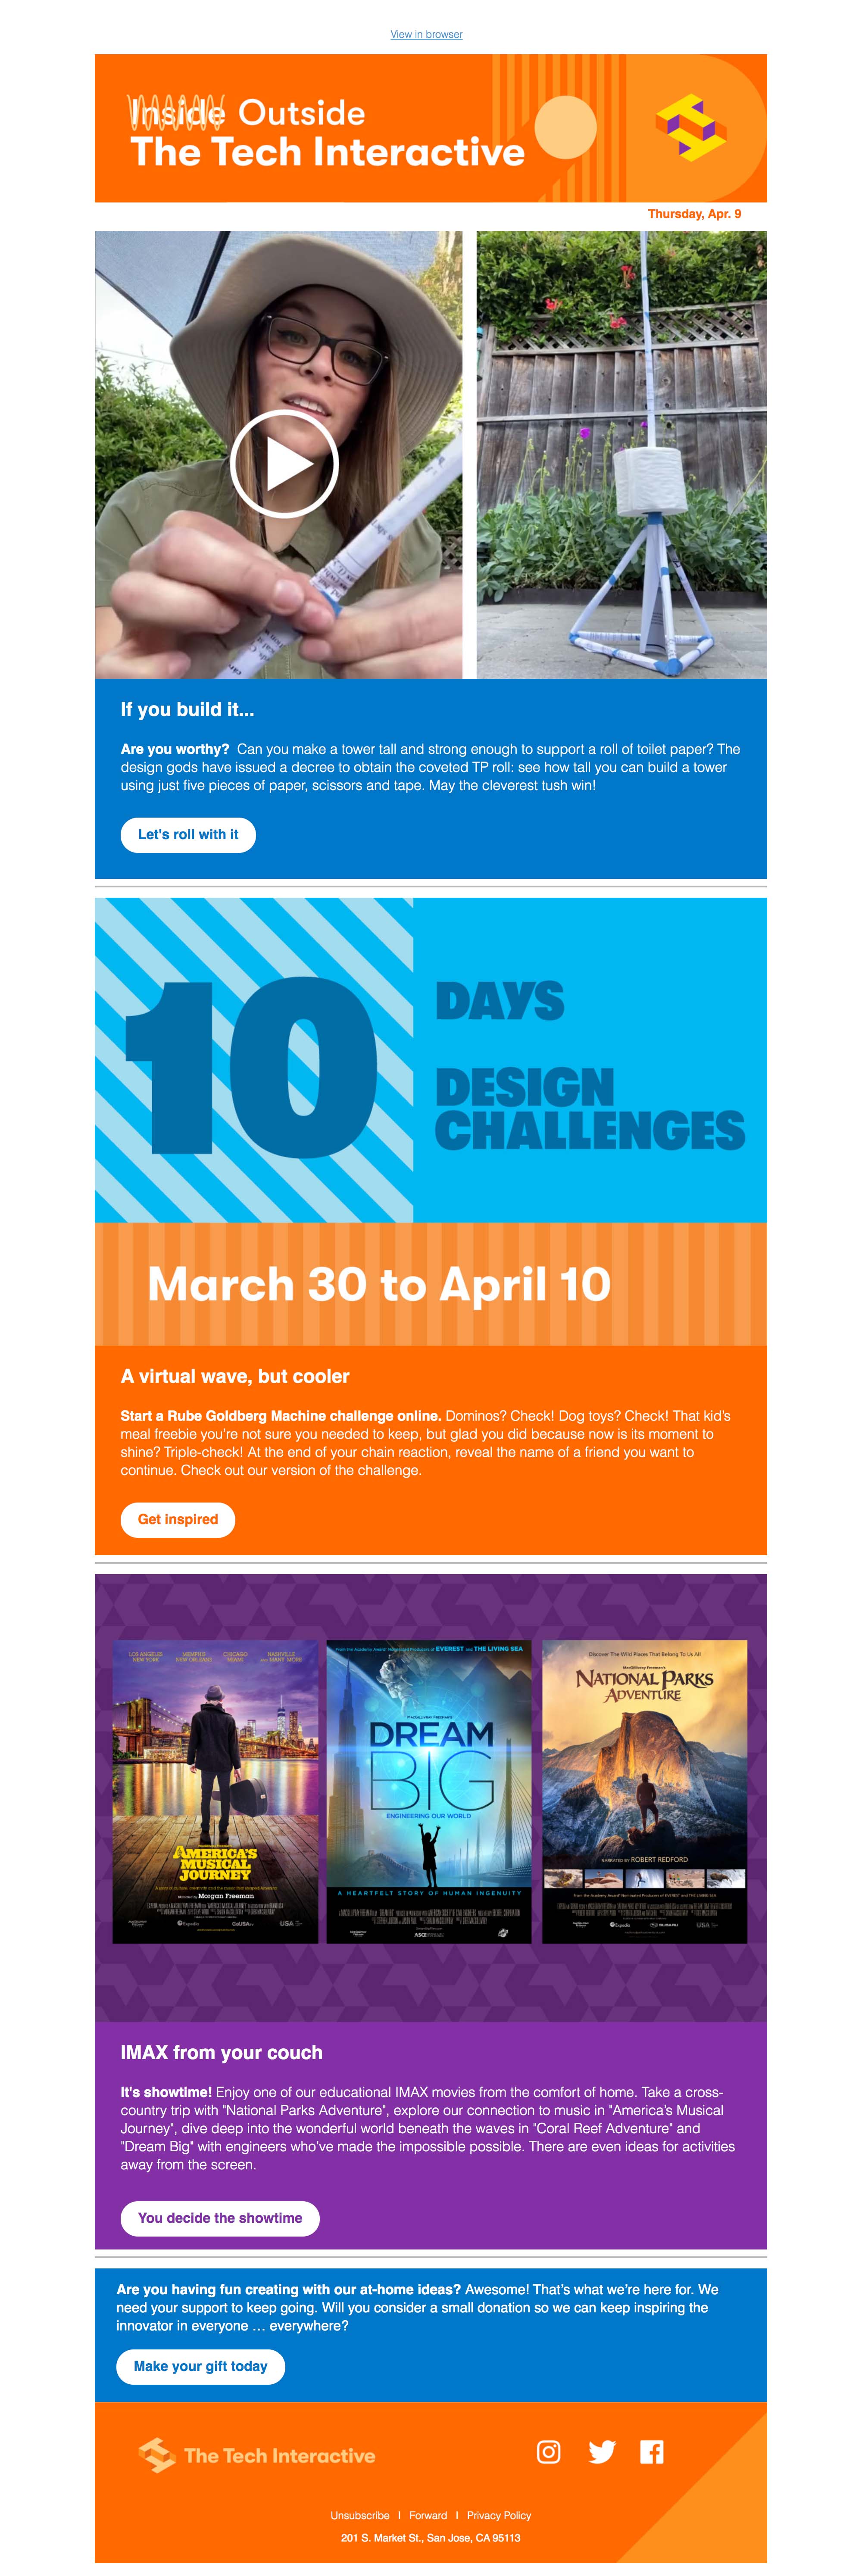 ICYMI: 10-day design challenge rolling full speed ahead - desktop view